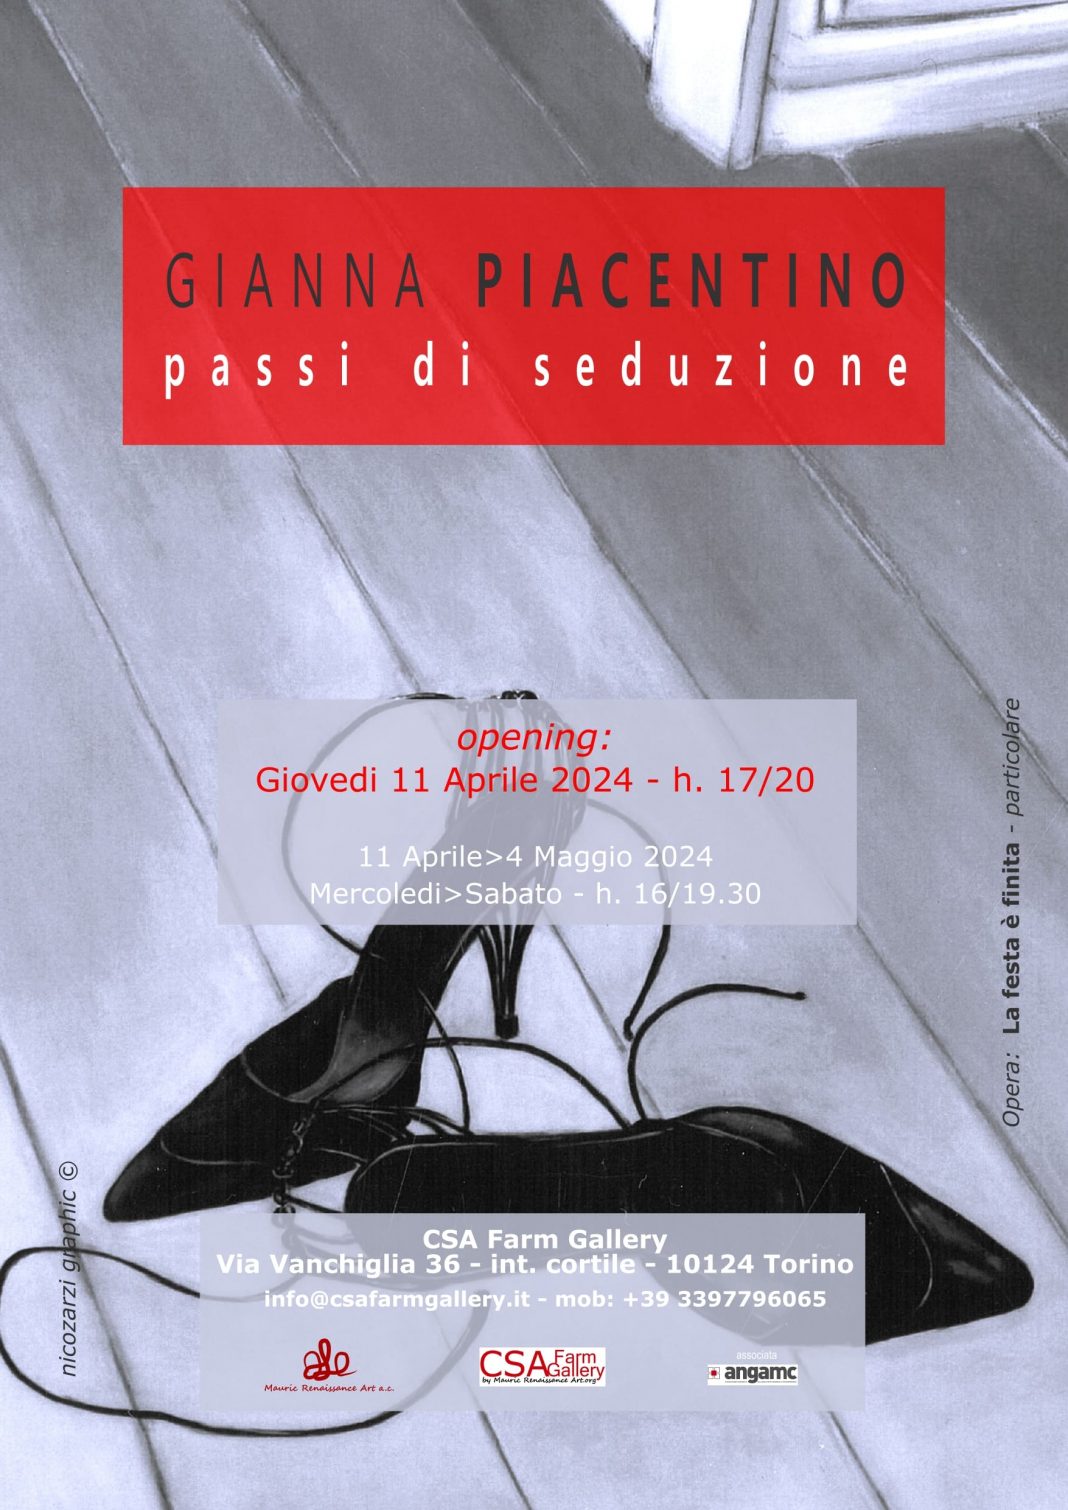 Gianna Piacentino – Passi di seduzionehttps://www.exibart.com/repository/media/formidable/11/img/b14/2-Locandina-Passi-di-seduzione-Gianna-Piacentino_page-0001-1-1068x1510.jpg